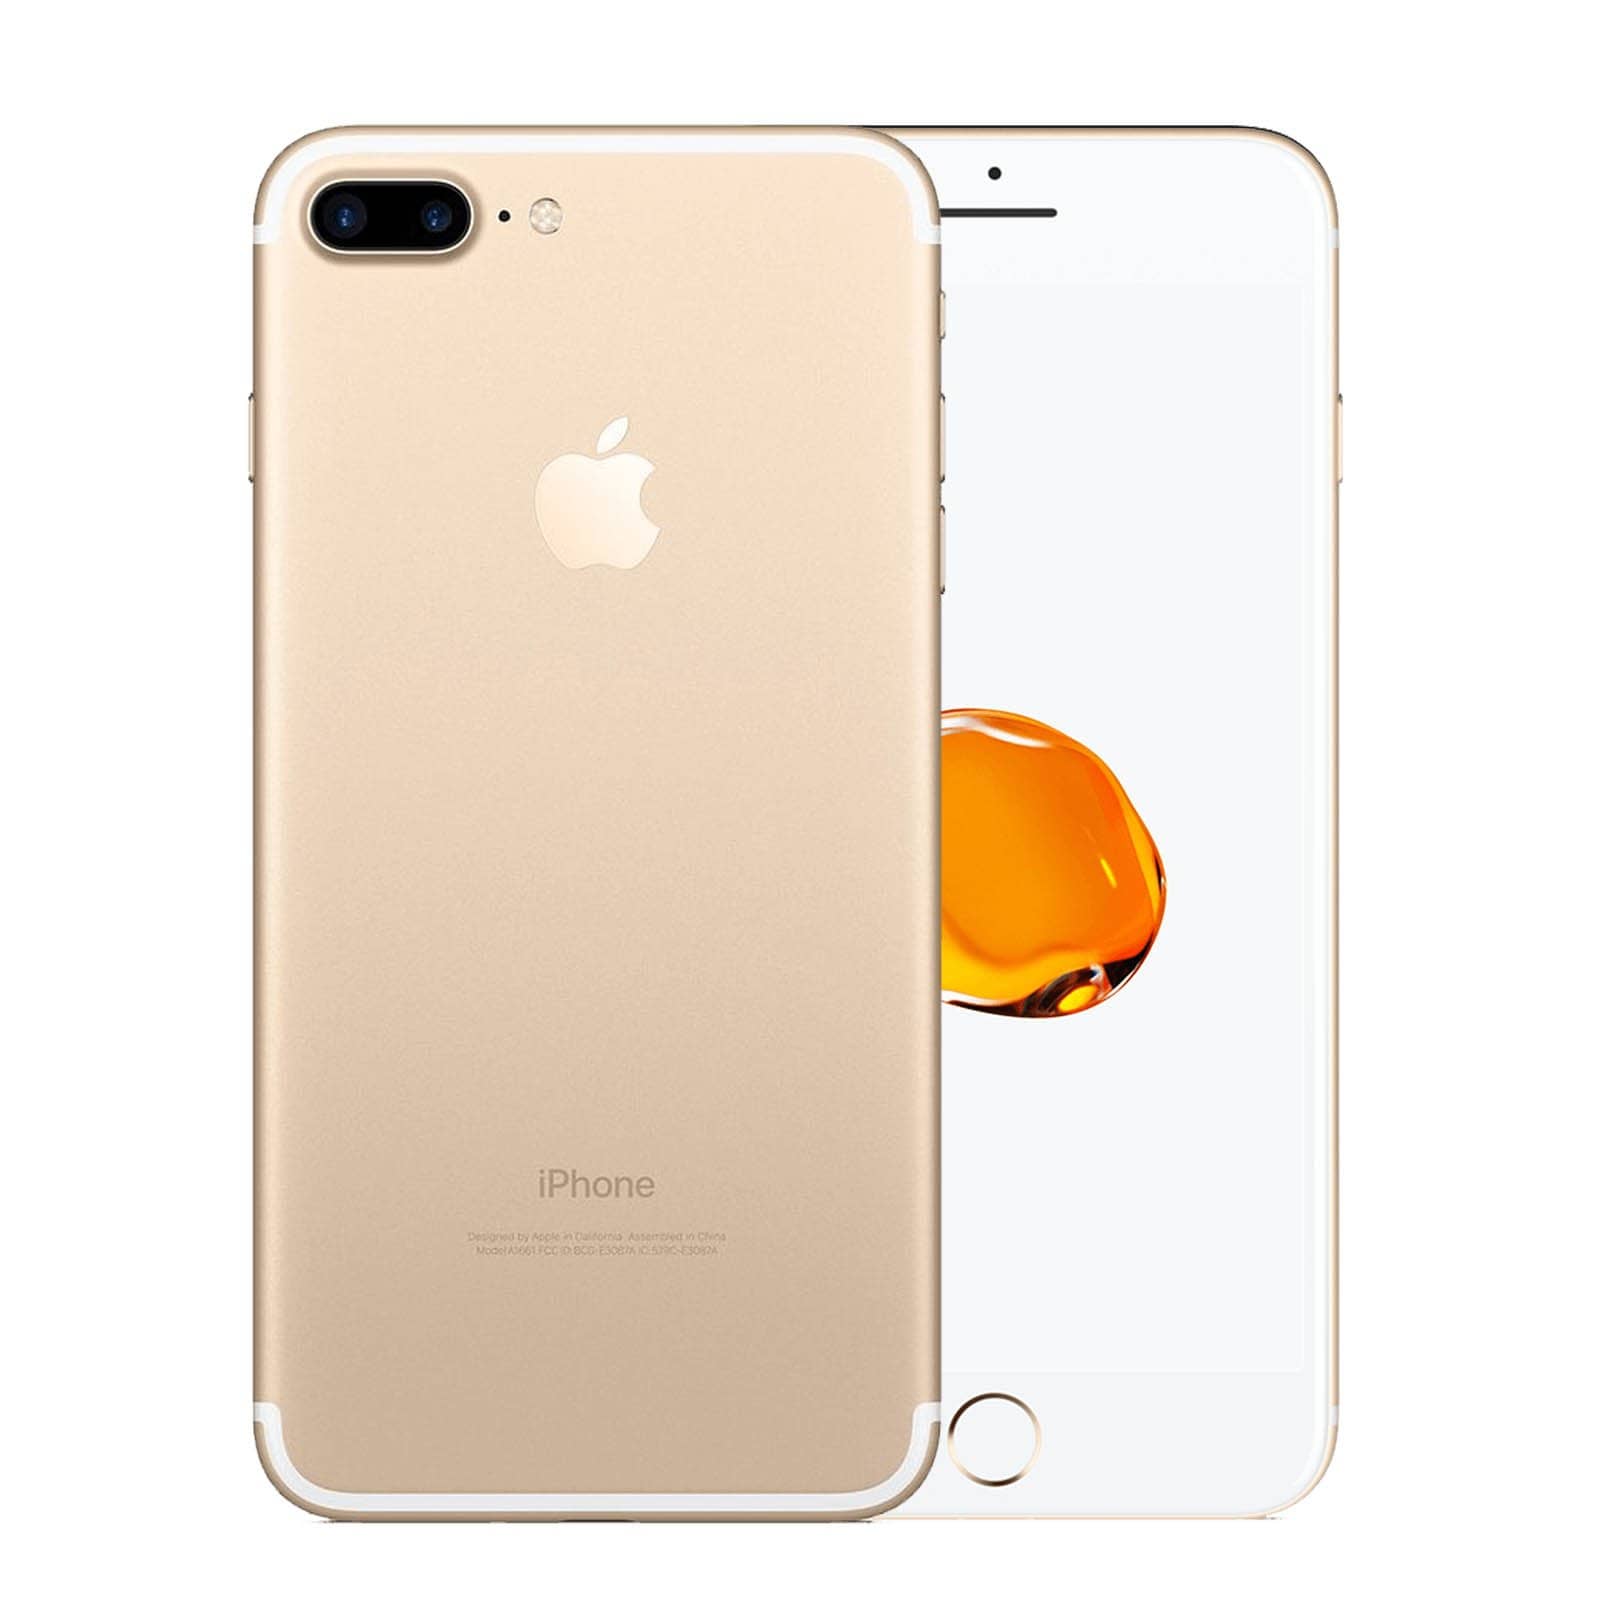 Apple iPhone 7 Plus 32GB Gold Good - Unlocked 32GB Gold Good